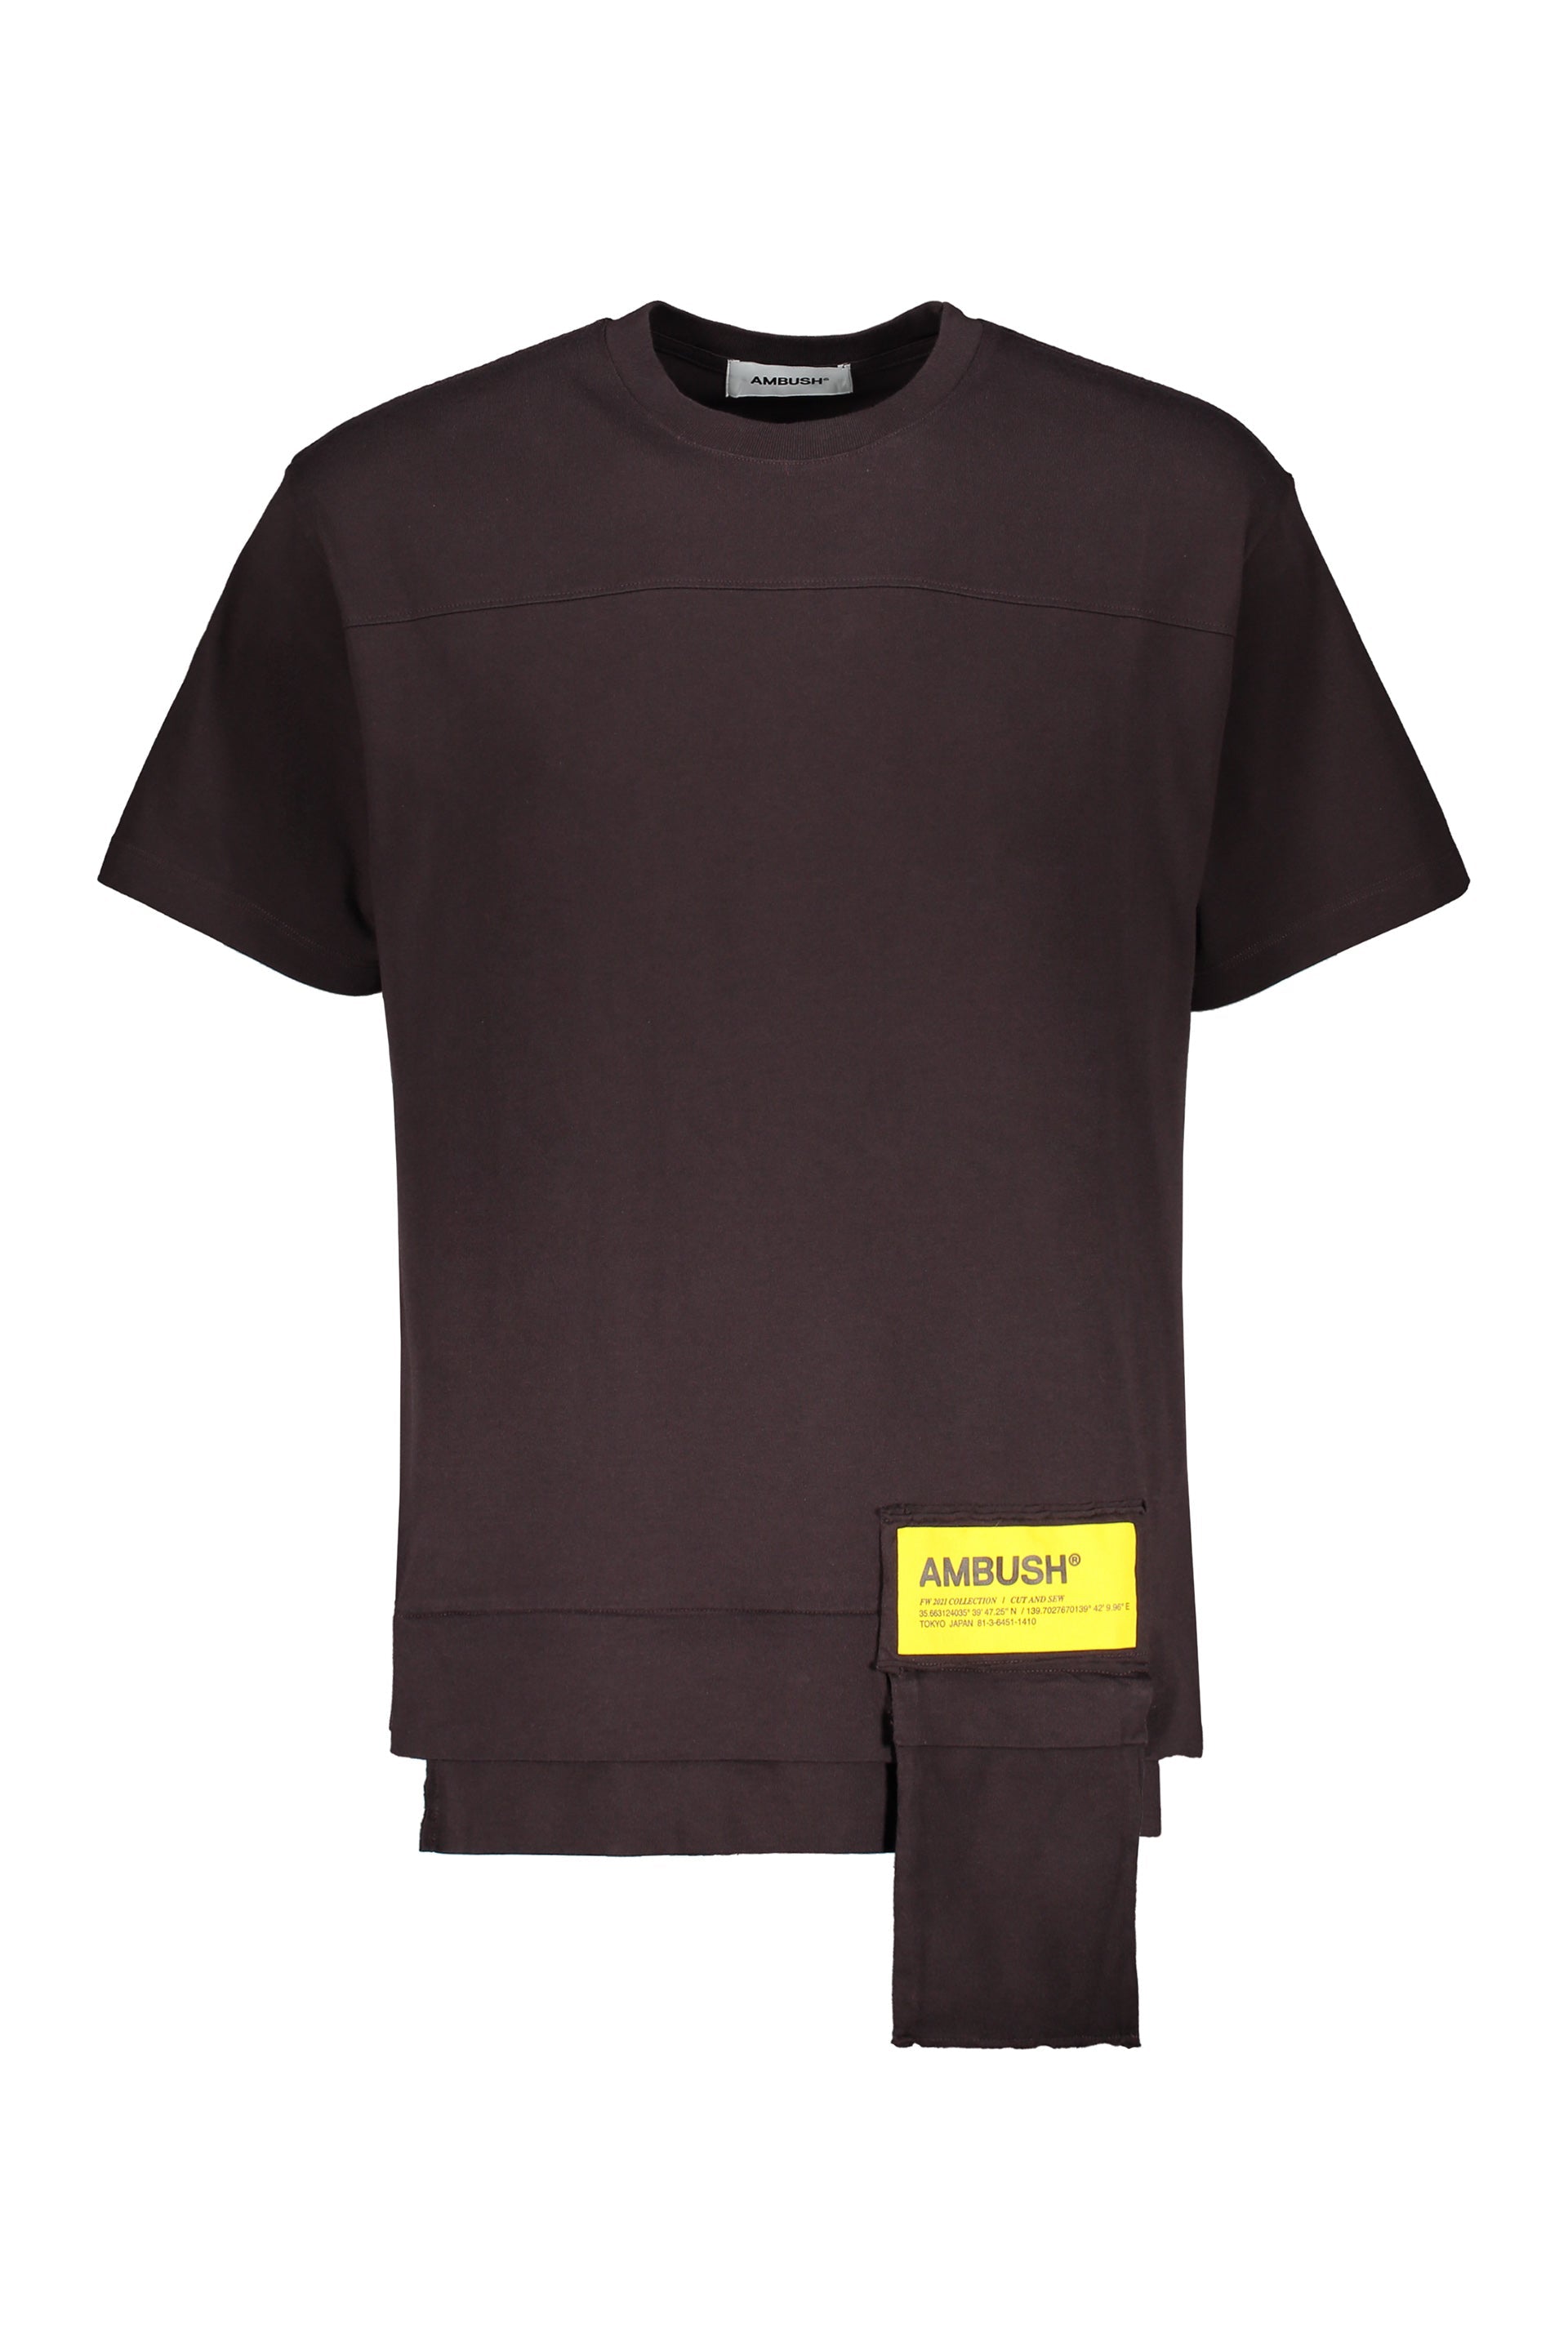 AMBUSH-OUTLET-SALE-Cotton-T-shirt-Shirts-L-ARCHIVE-COLLECTION_fb113071-ae62-43f7-b089-60e8e79349a8.jpg